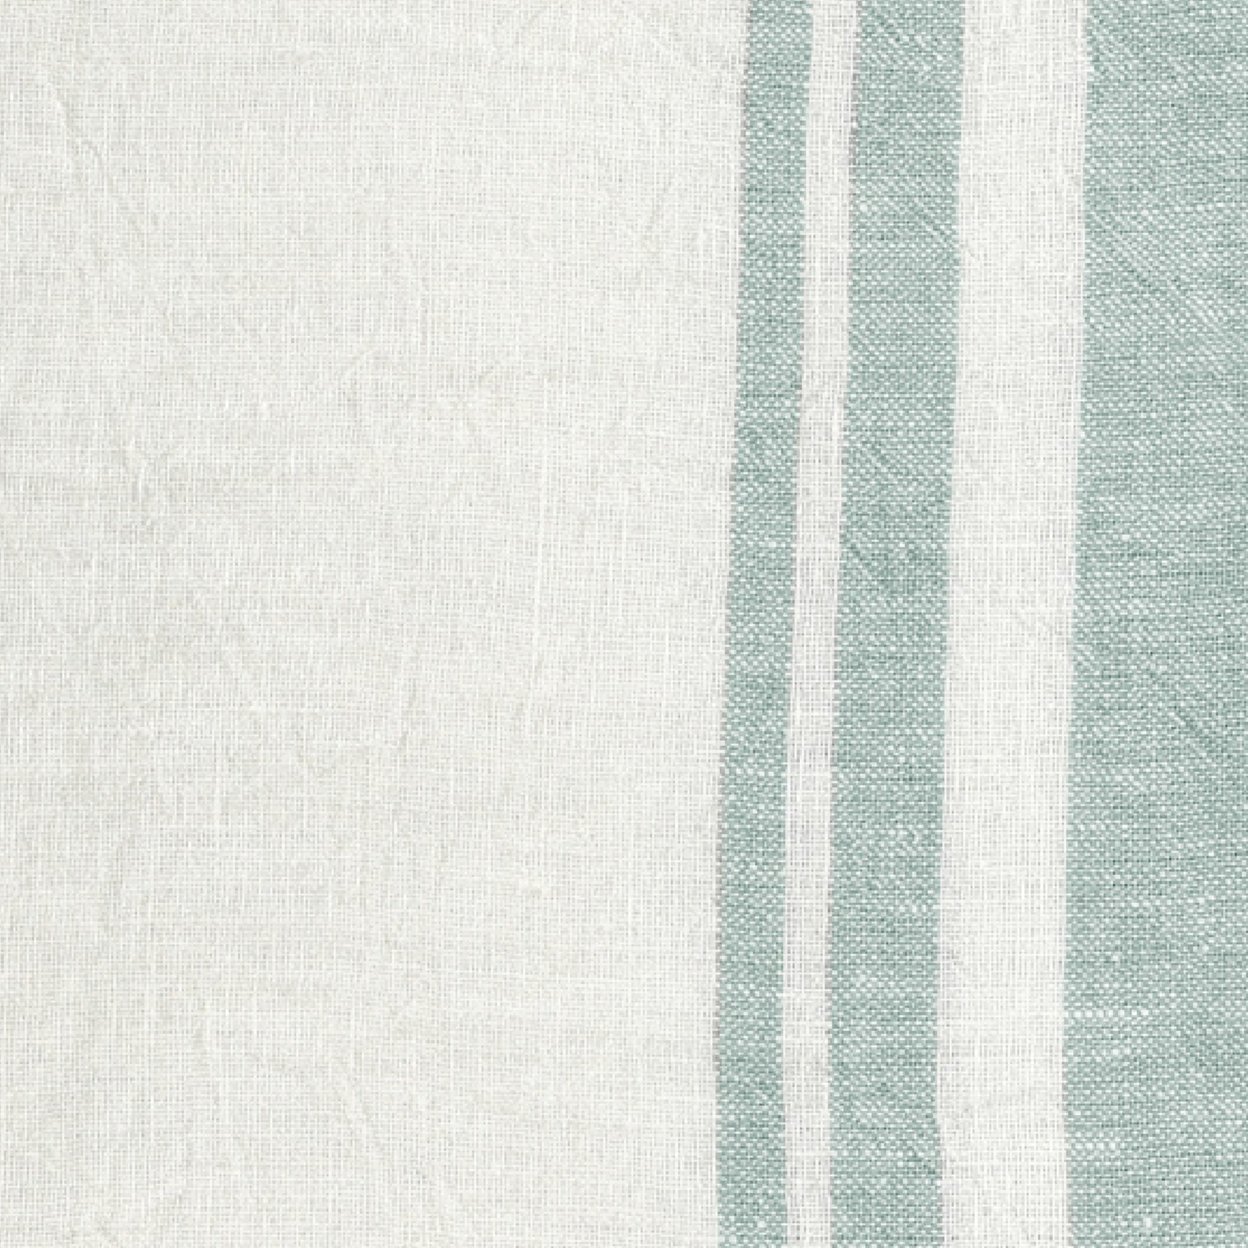 50 Inch Throw Blanket, Soft Belgian Flax Linen, Sage Green Stripes, White- Saltoro Sherpi